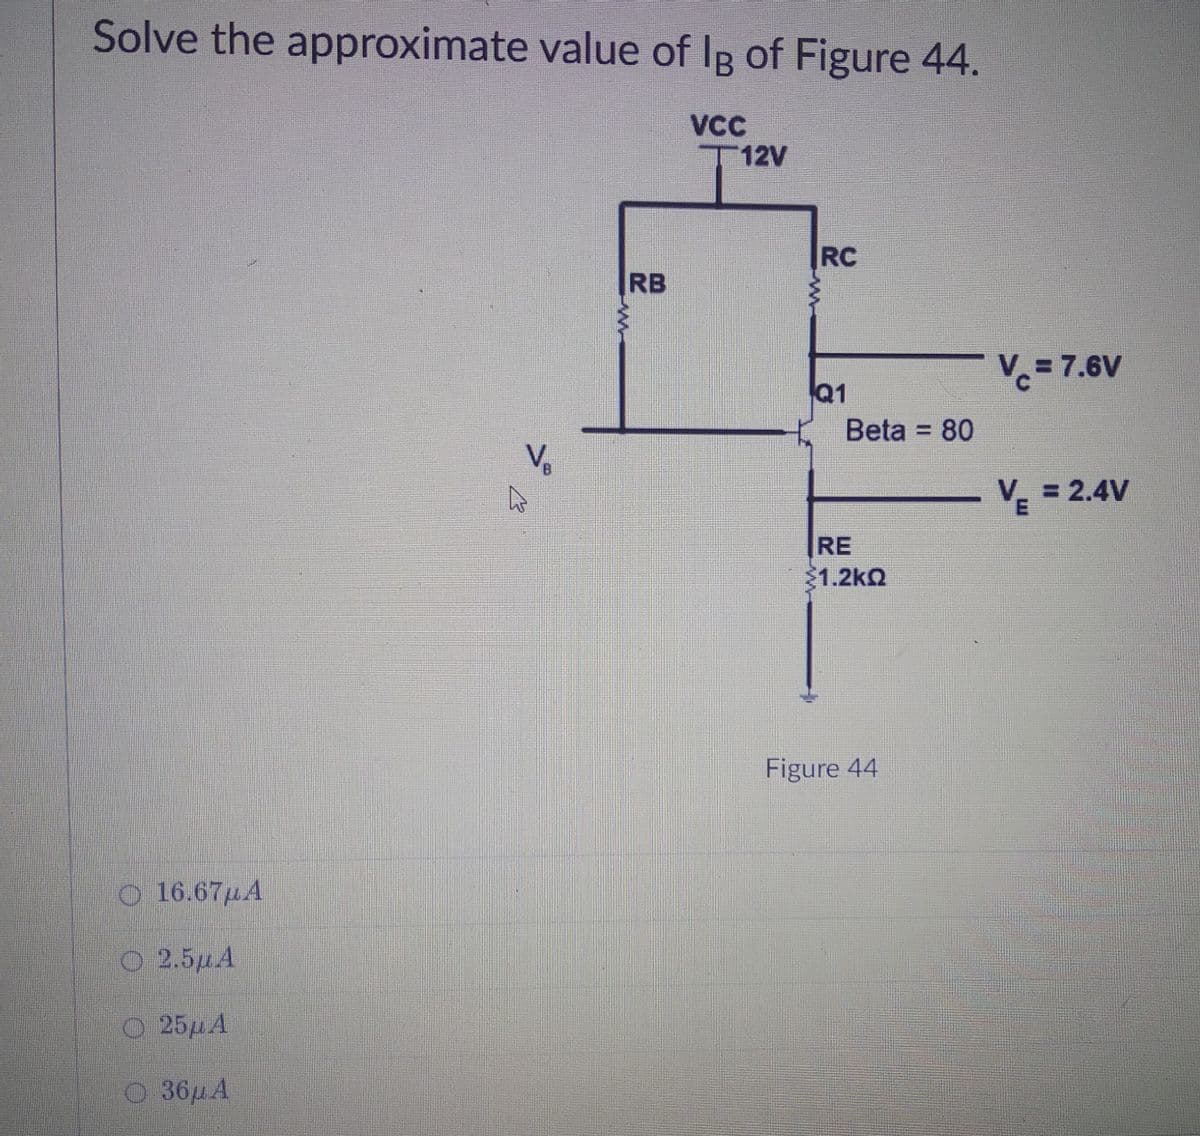 Solve the approximate value of IB of Figure 44.
VC
T12V
RC
RB
V= 7.6V
Q1
Beta = 80
%3D
Ve
= 2.4V
RE
1.2kQ
Figure 44
O 16.67µA
O 2.5µA
O 25HA
O 36µA
